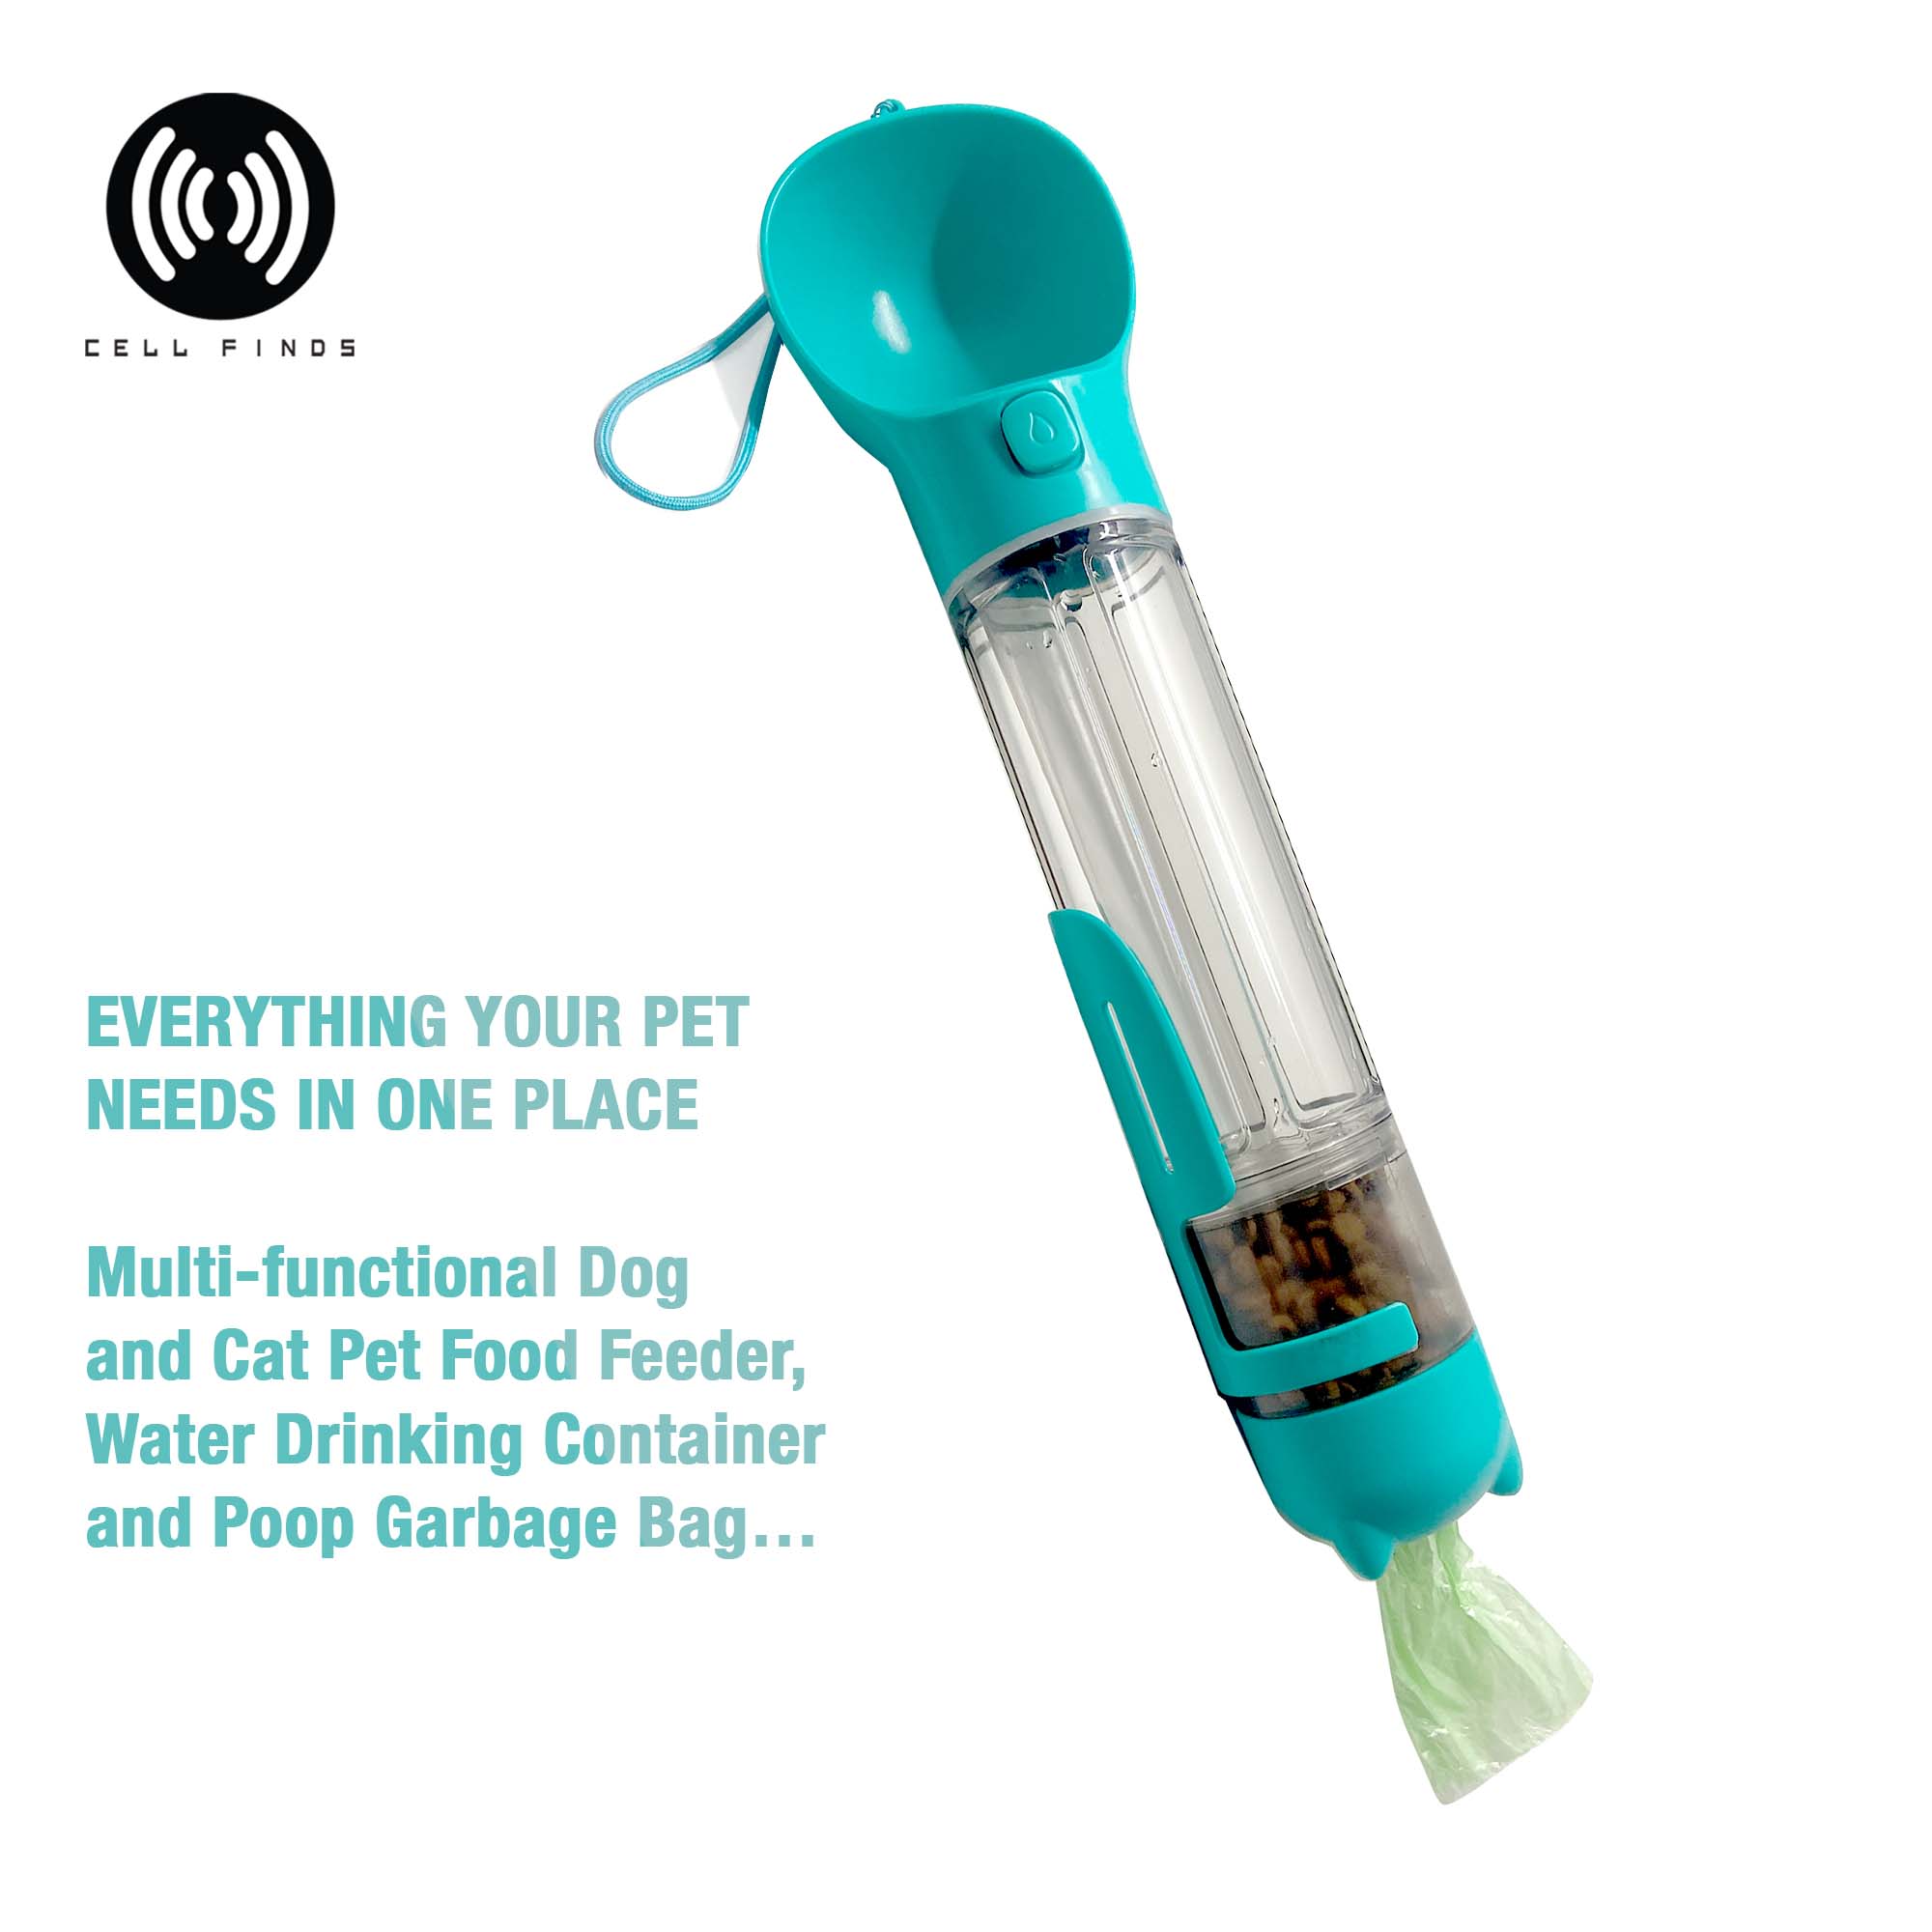 Multifunctional Dogs & Cat Pet Food Feeder, Water Drinking Container & Poop Garbage Bag